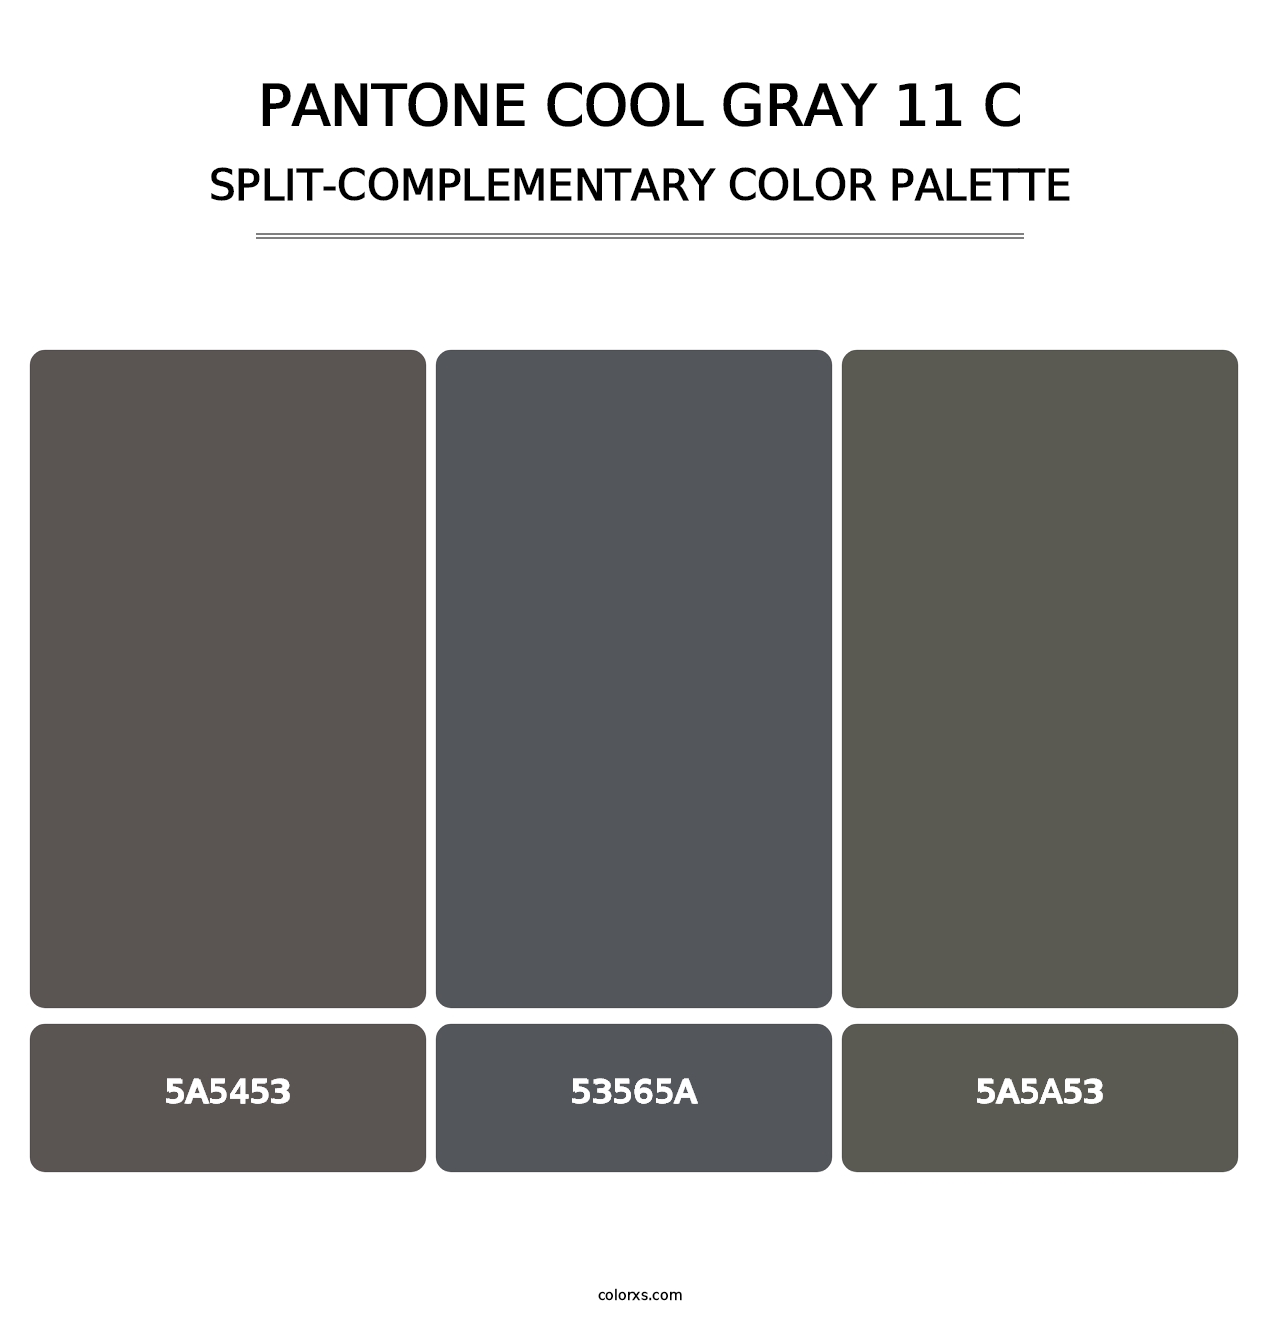 PANTONE Cool Gray 11 C - Split-Complementary Color Palette